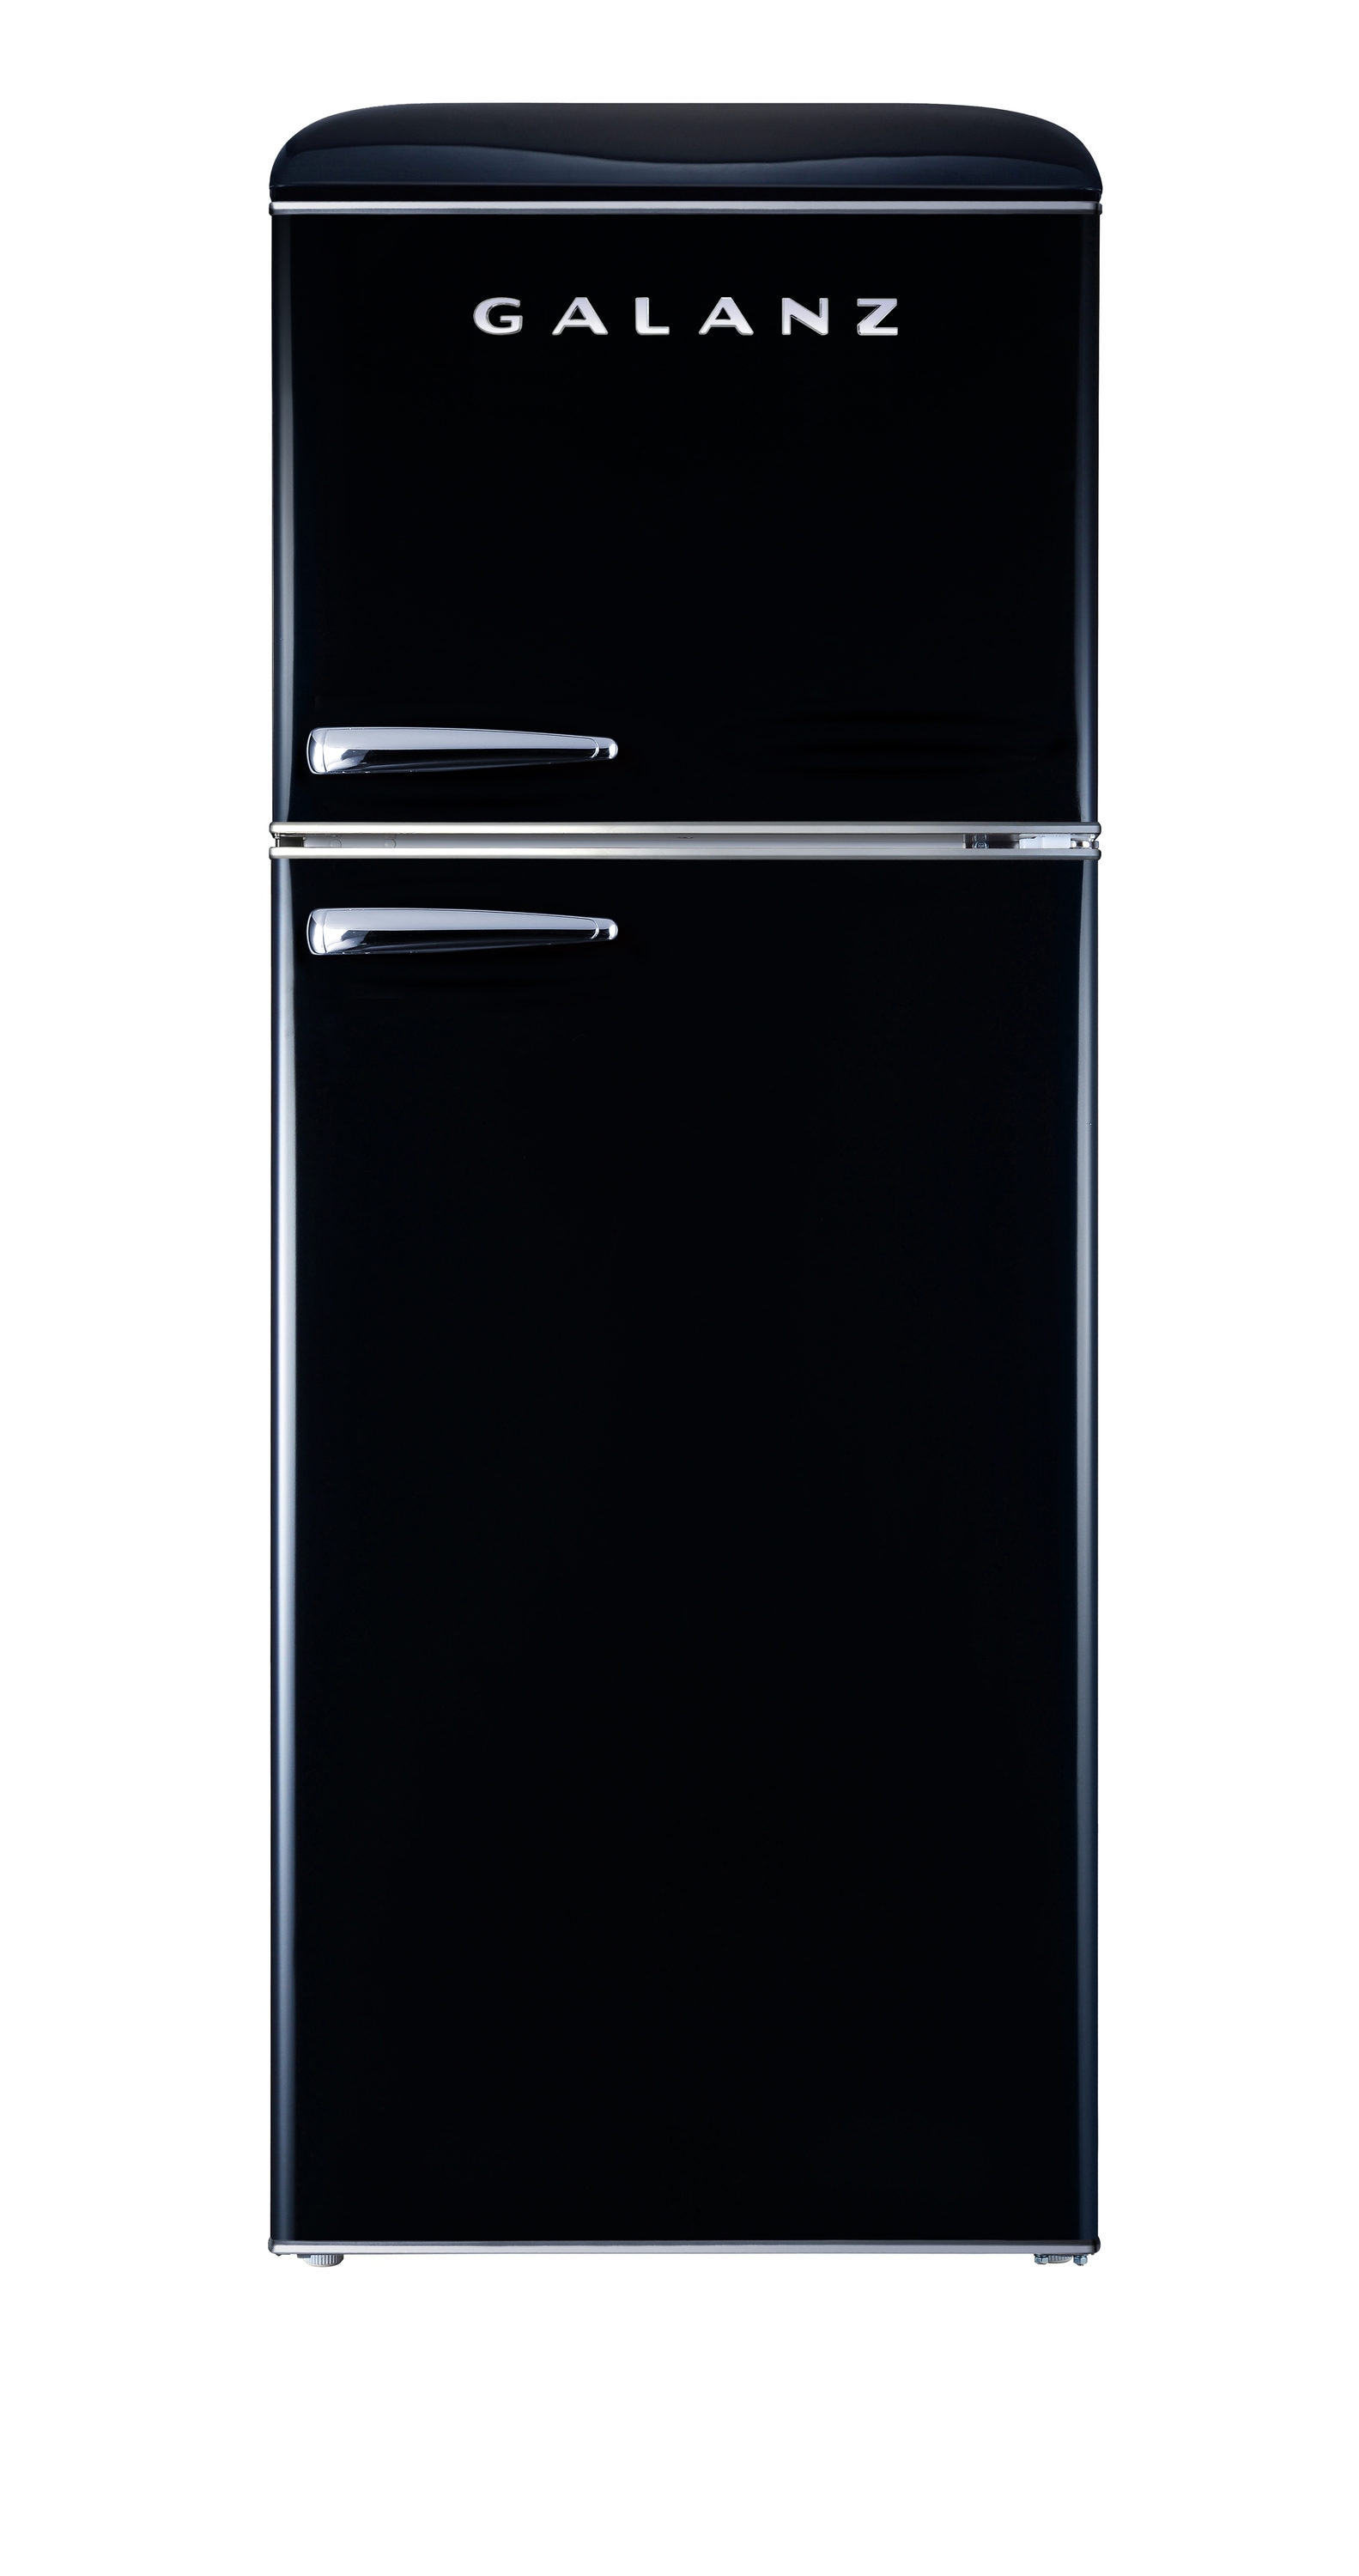 Galanz Refrigerator - appliances - by owner - sale - craigslist